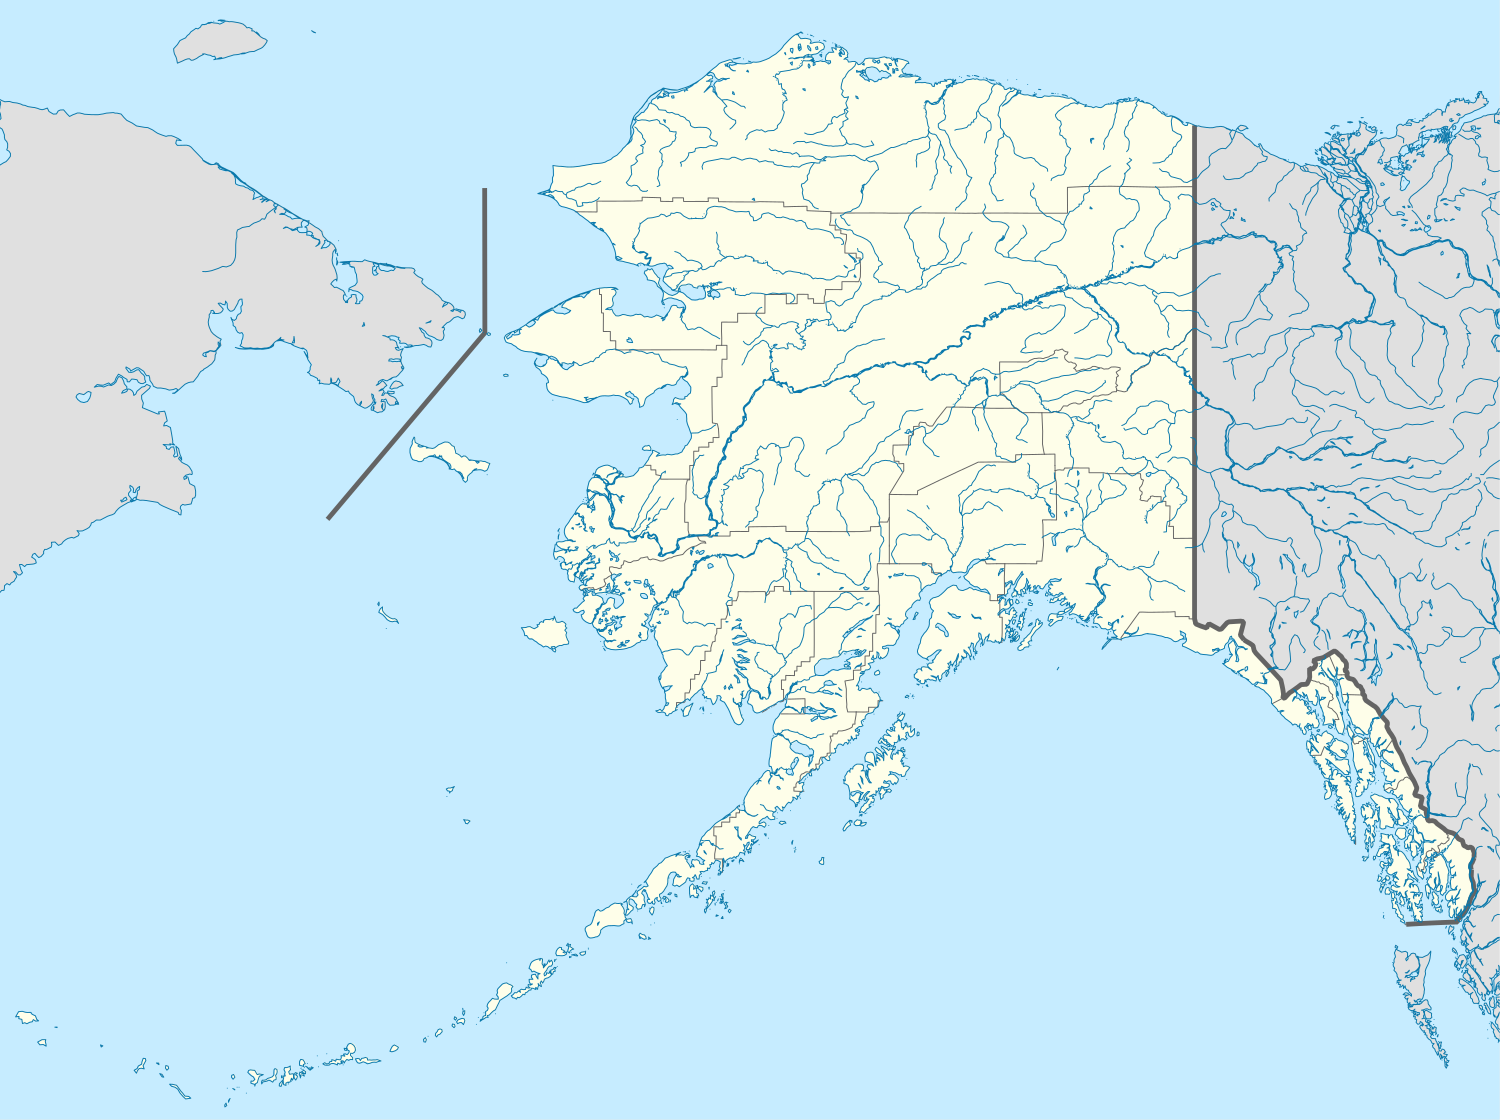 University of Alaska Anchorage is located in Alaska